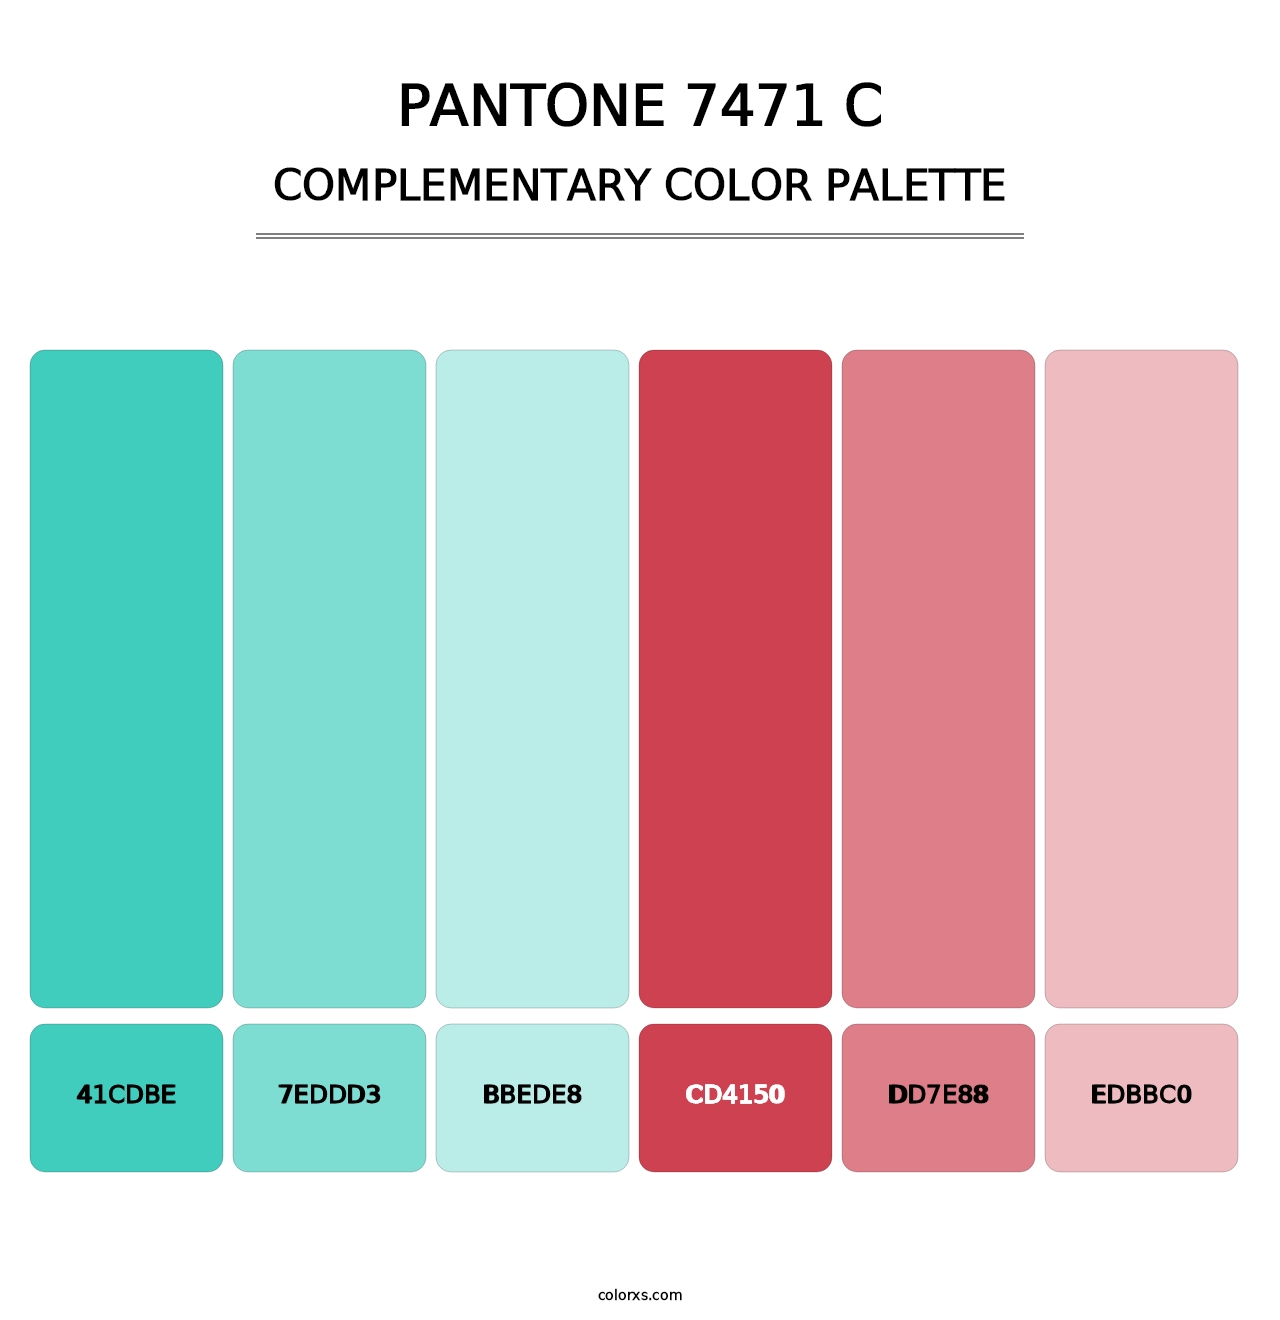 PANTONE 7471 C - Complementary Color Palette